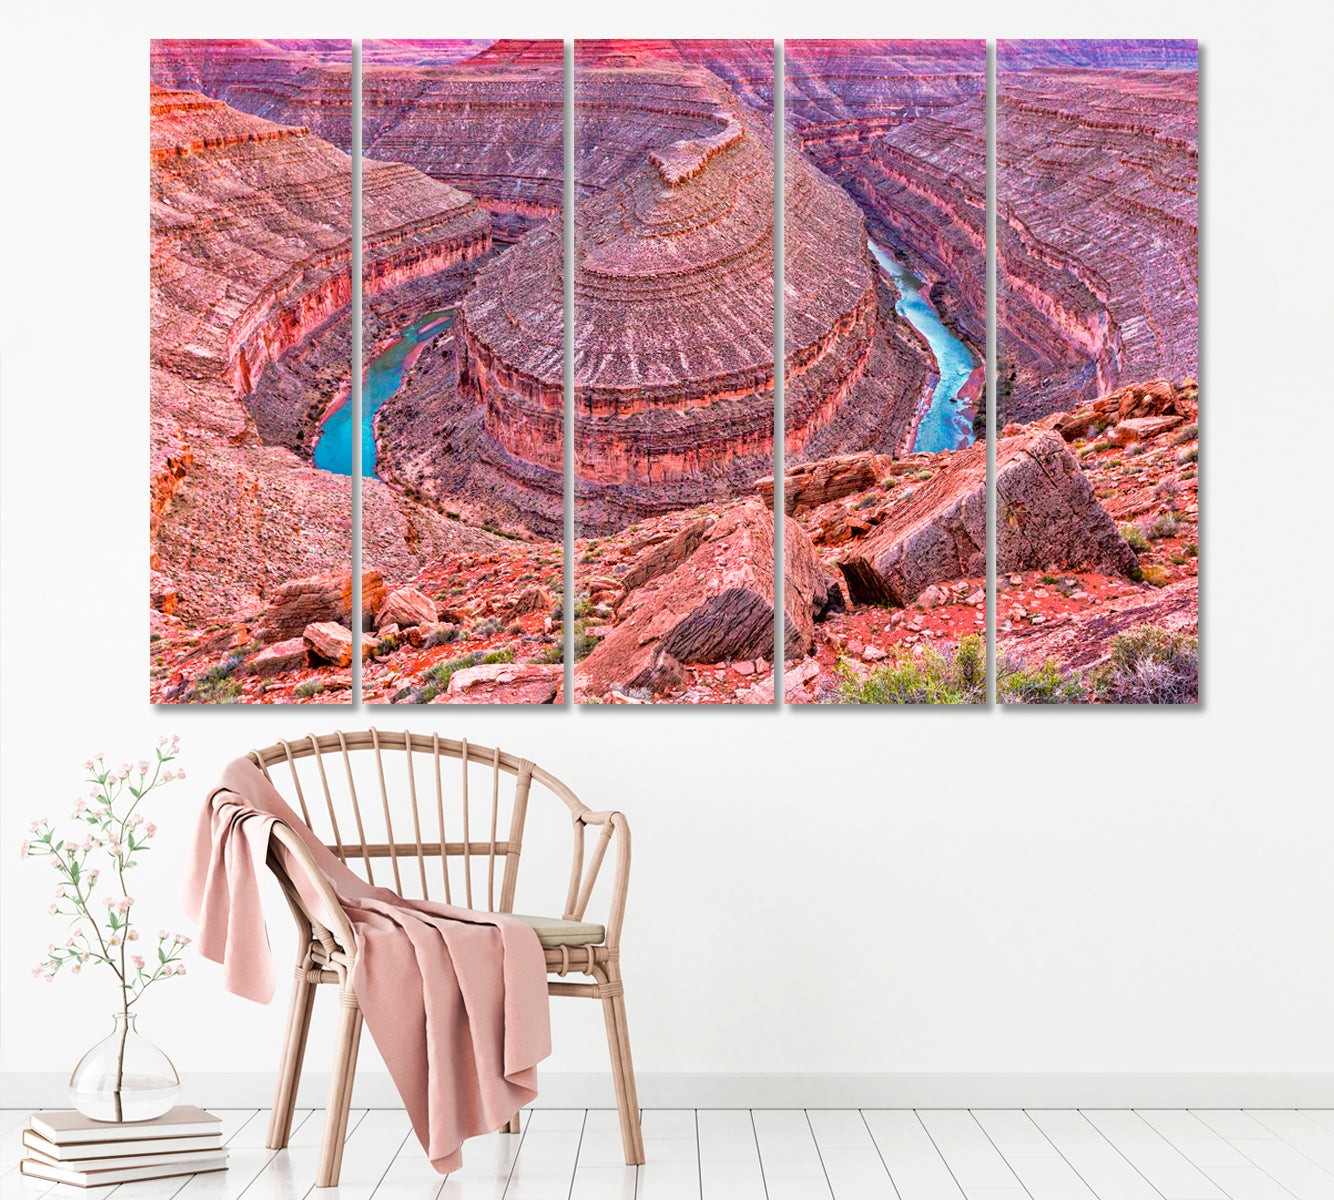 Goosenecks State Park Utah USA Canvas Print ArtLexy 5 Panels 36"x24" inches 